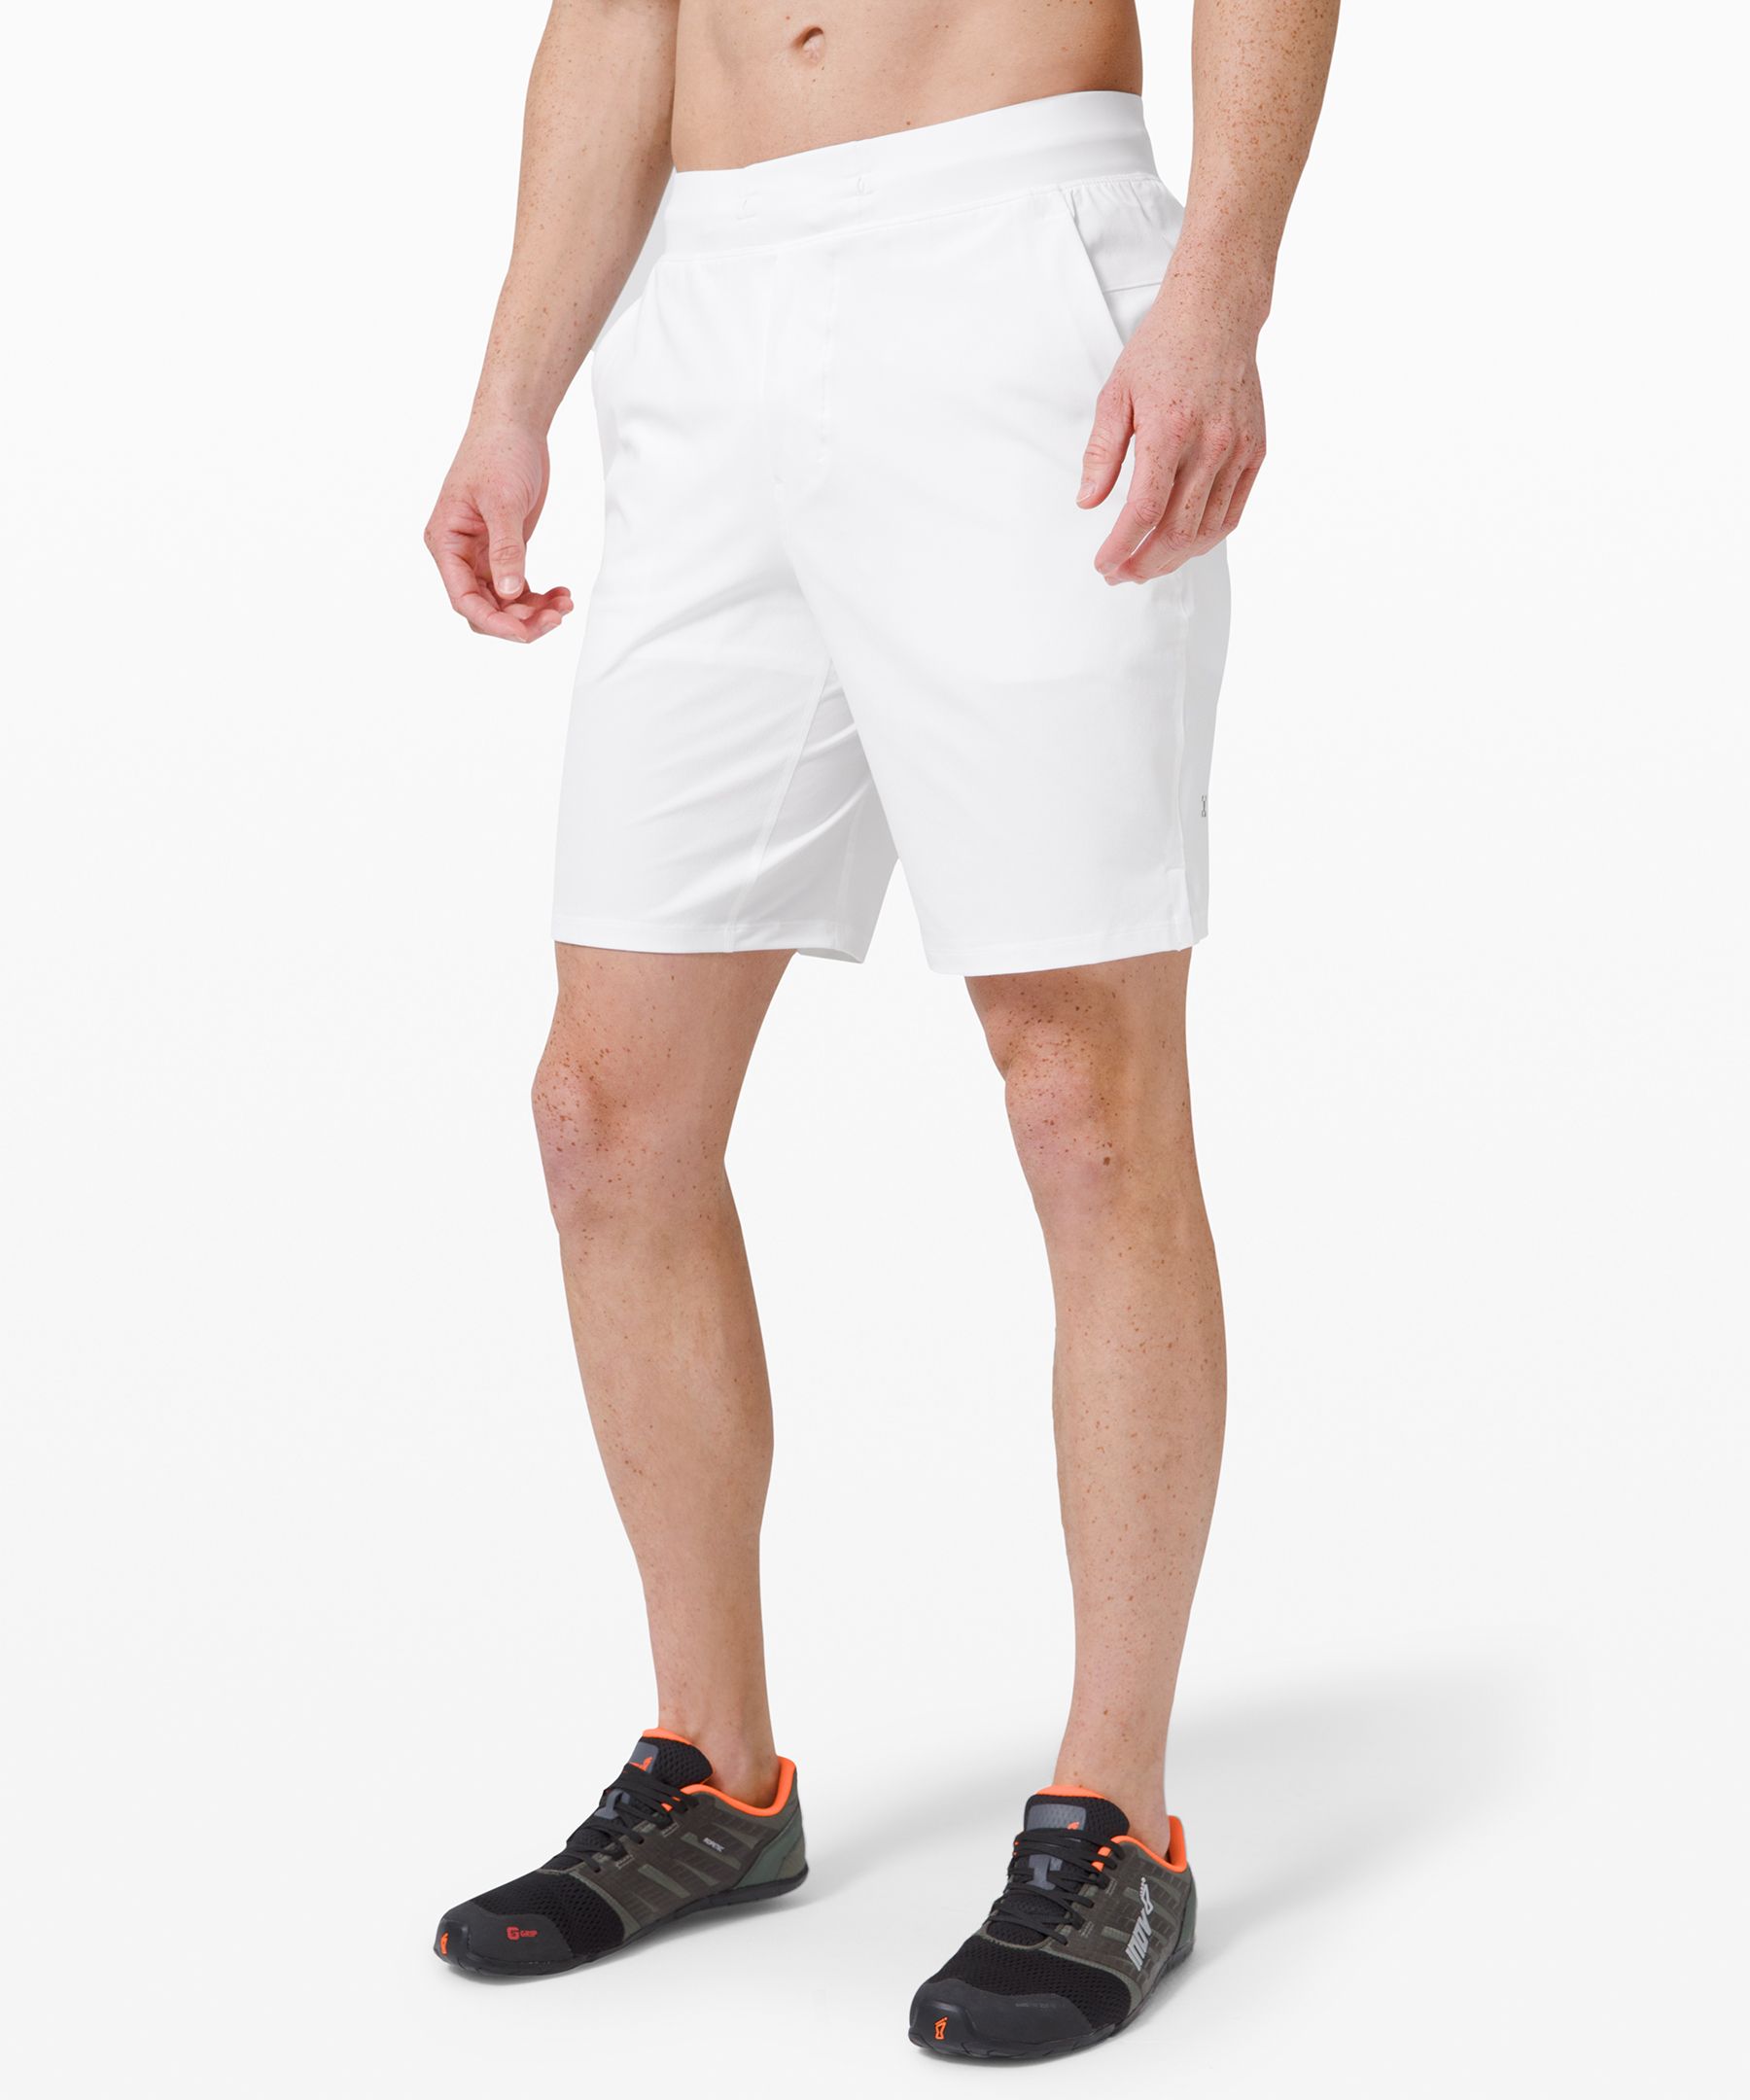 lululemon tennis shorts